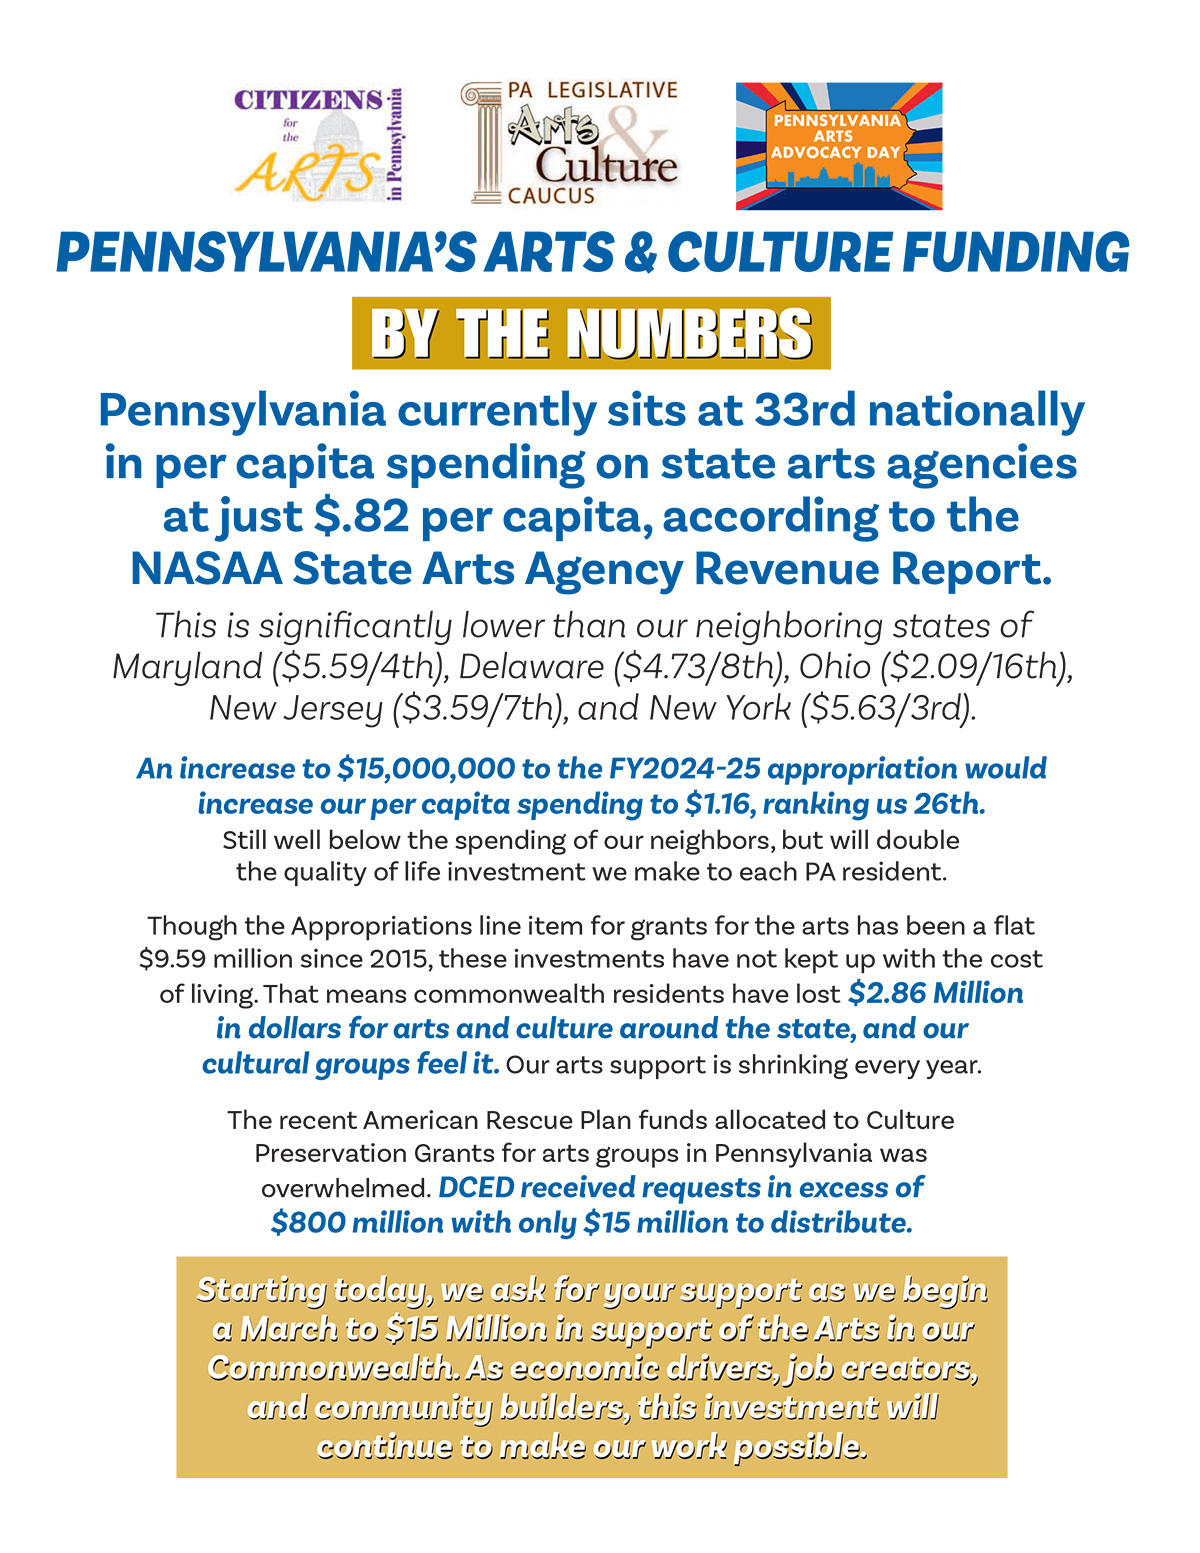 Pennsylvania's Arts & Culture Funding